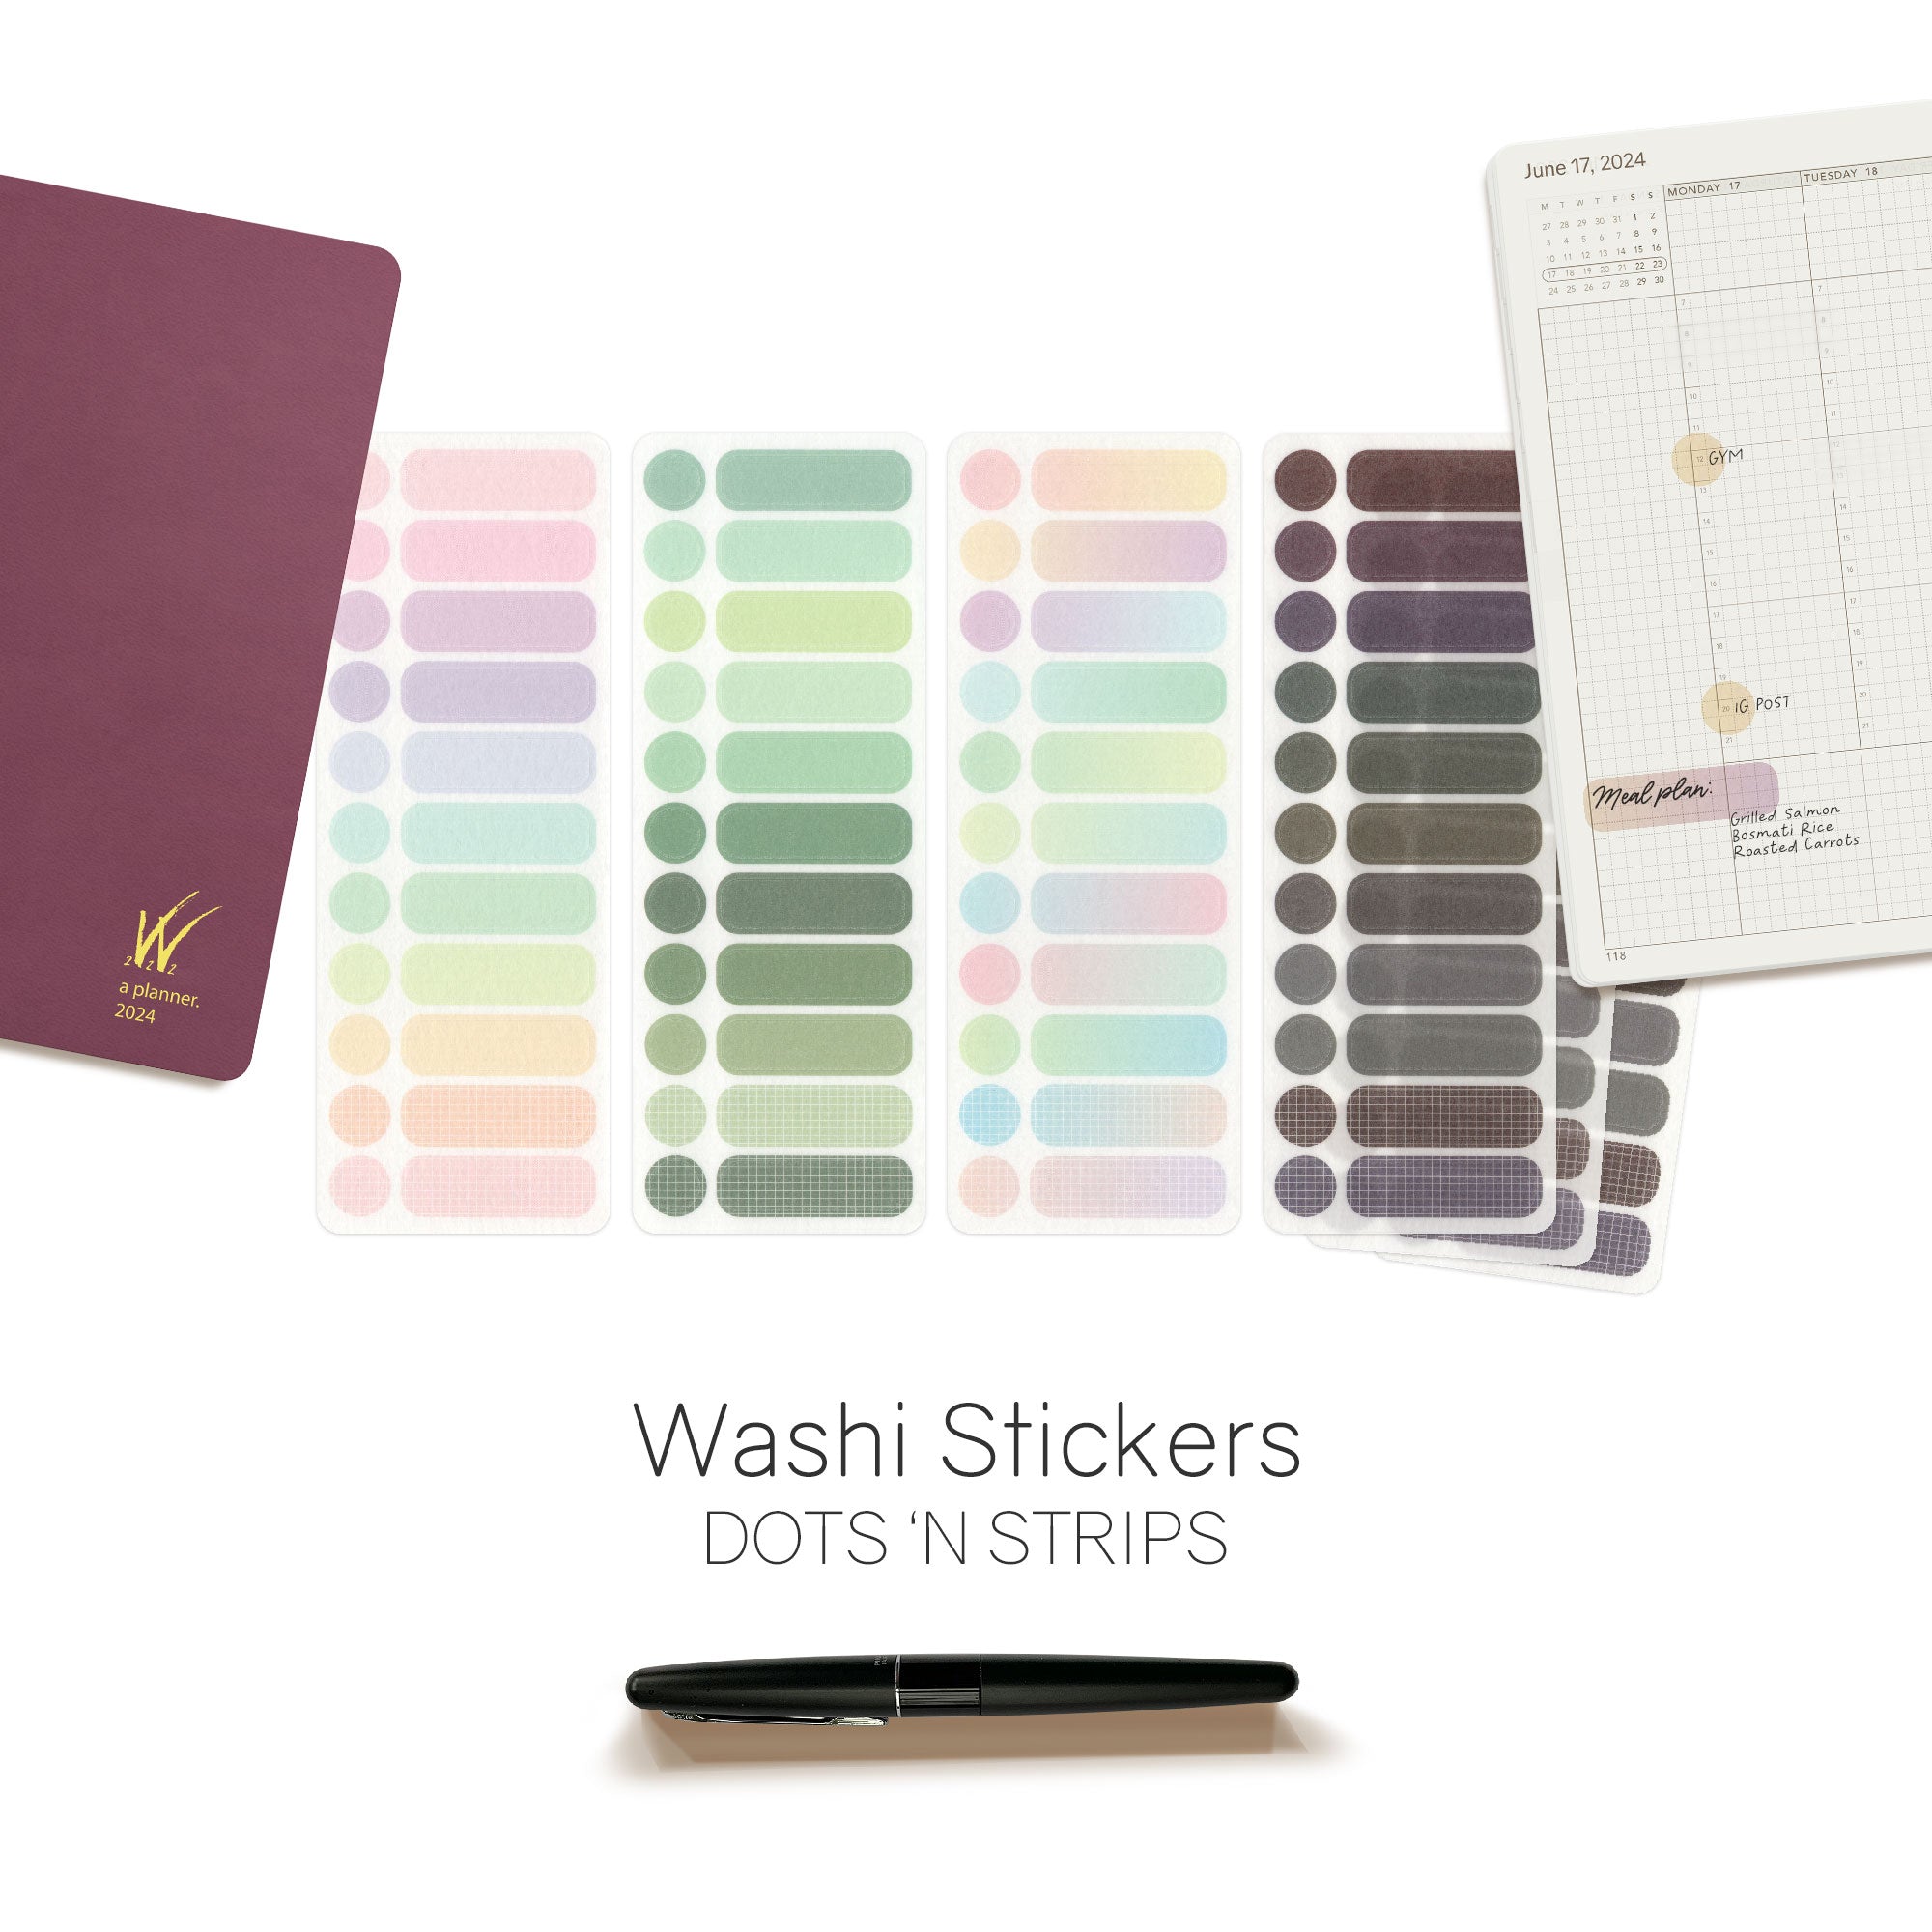 Washi Stickers - Strips 'n Dots